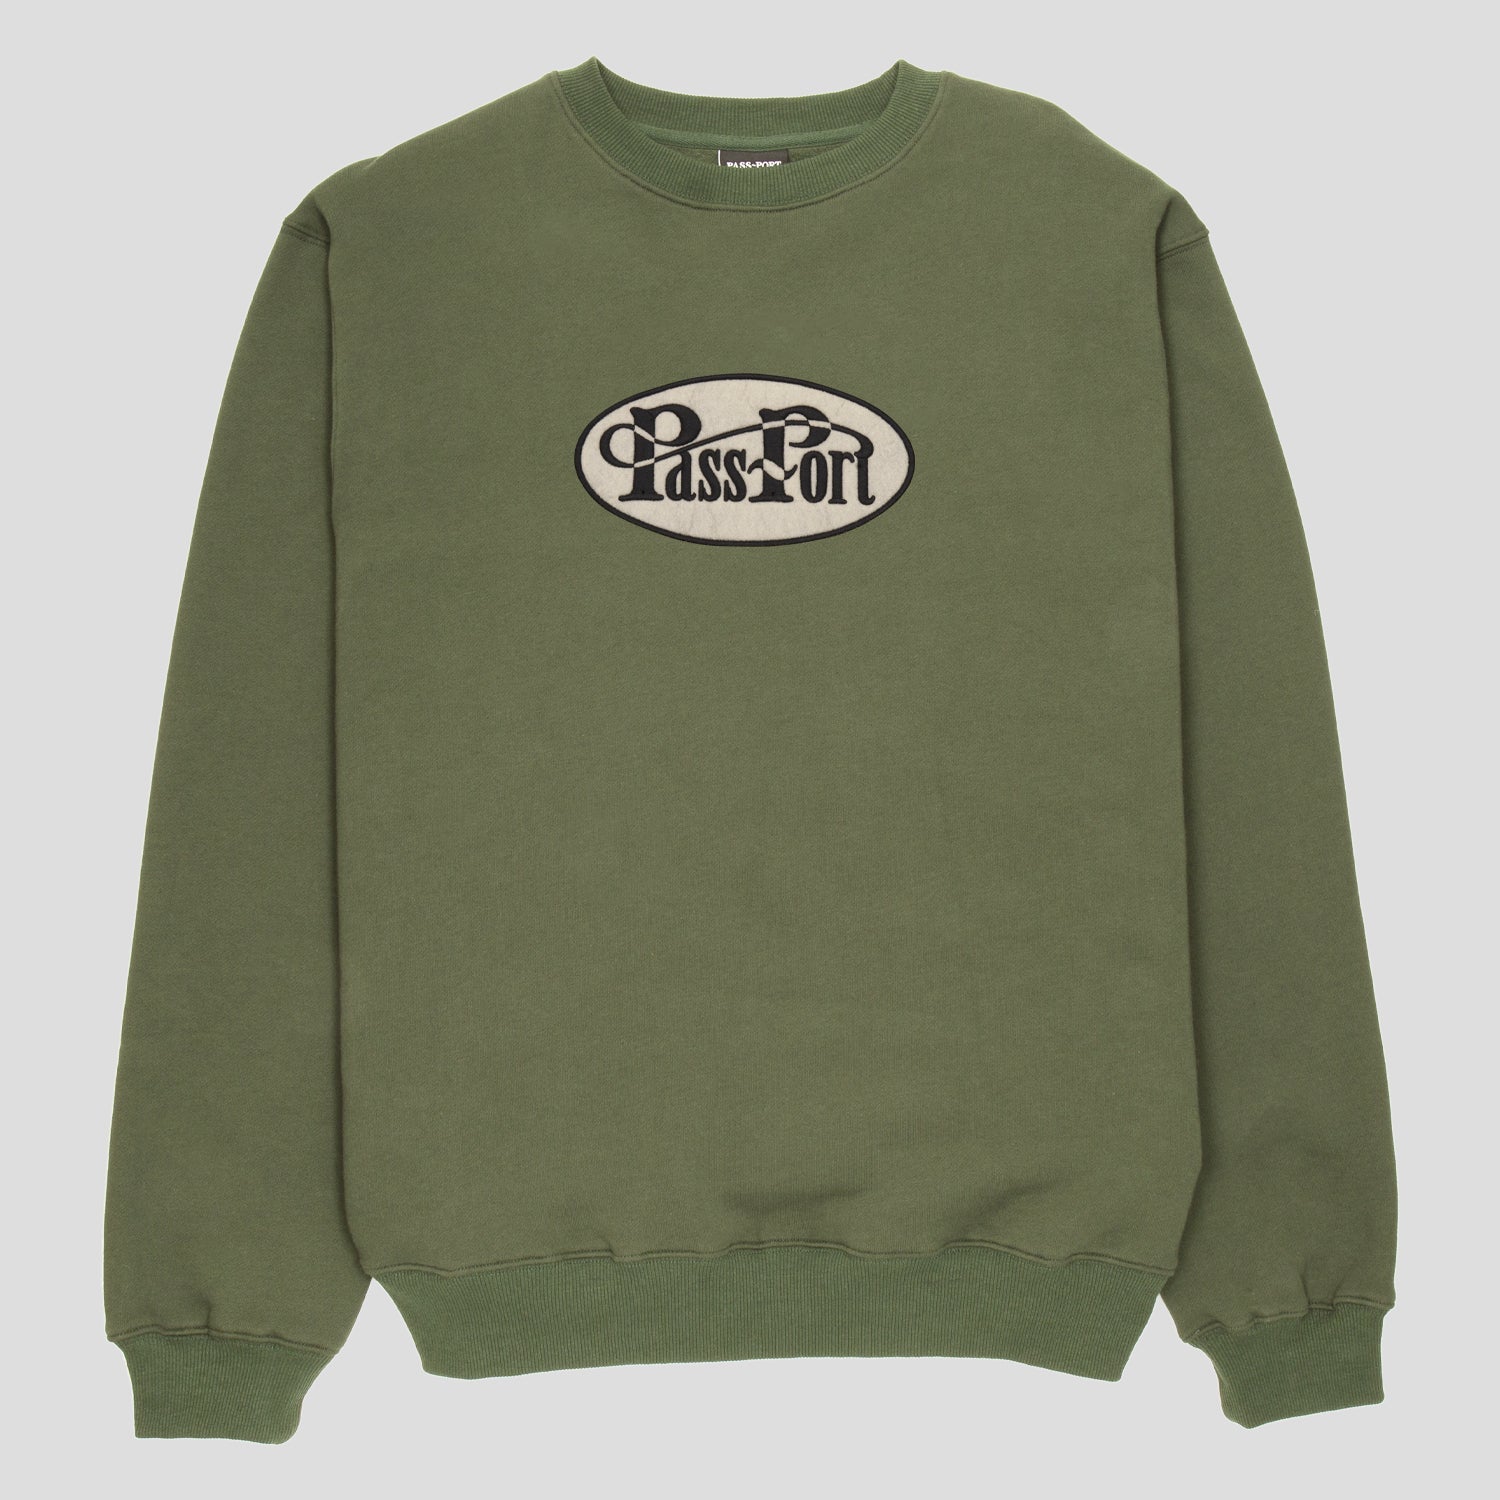 Pass~Port Whip Logo Sweater - Military Green